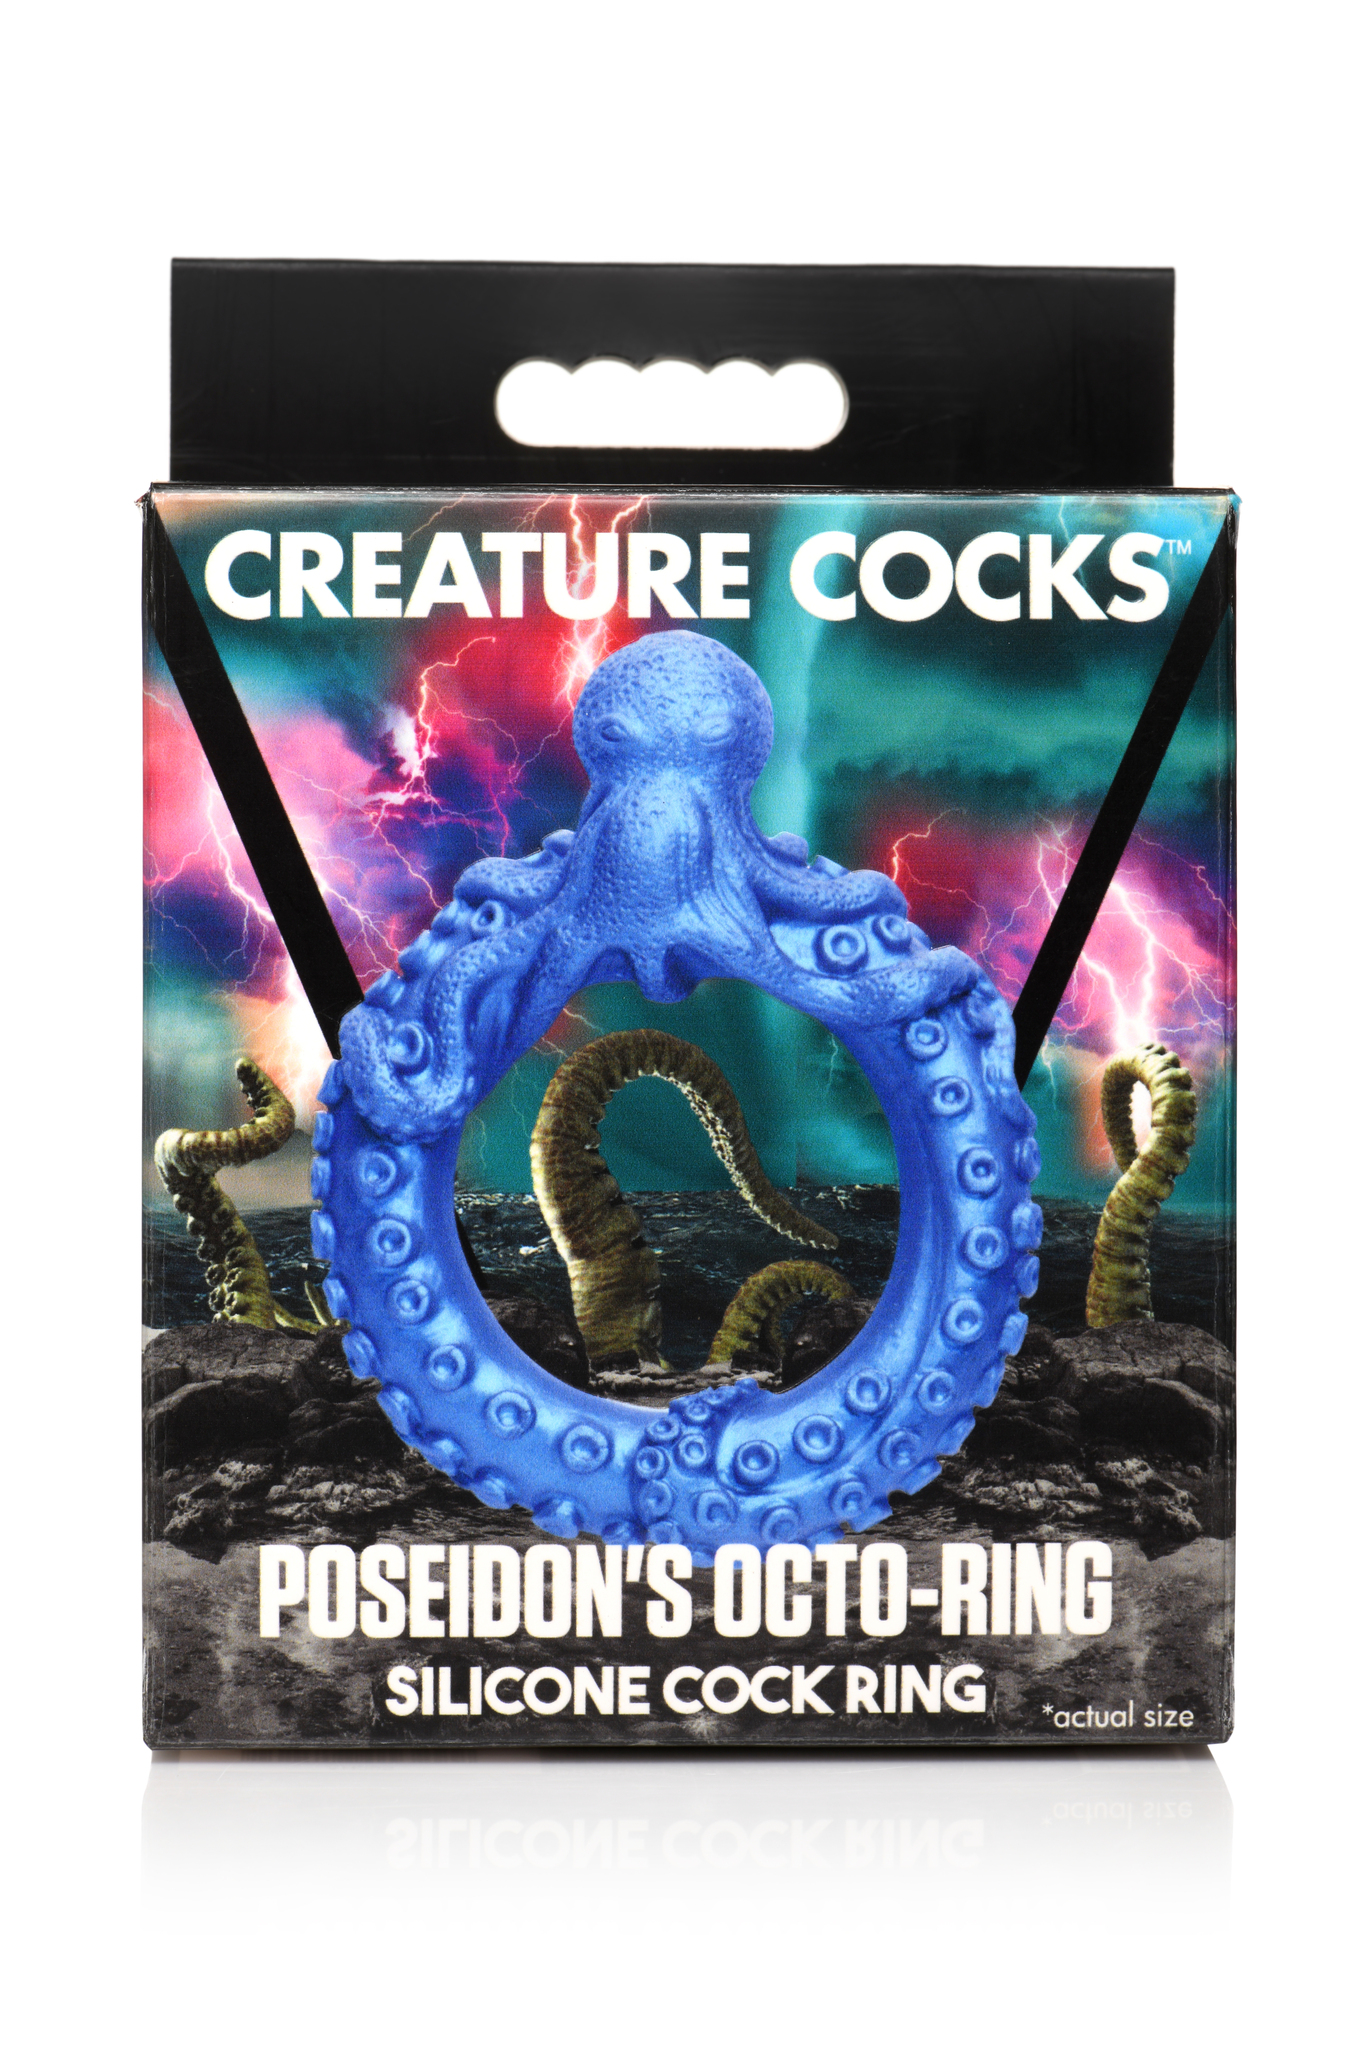 CREATURE COCKS POSEIDON'S OCTO -RING SILICONE COCK RING